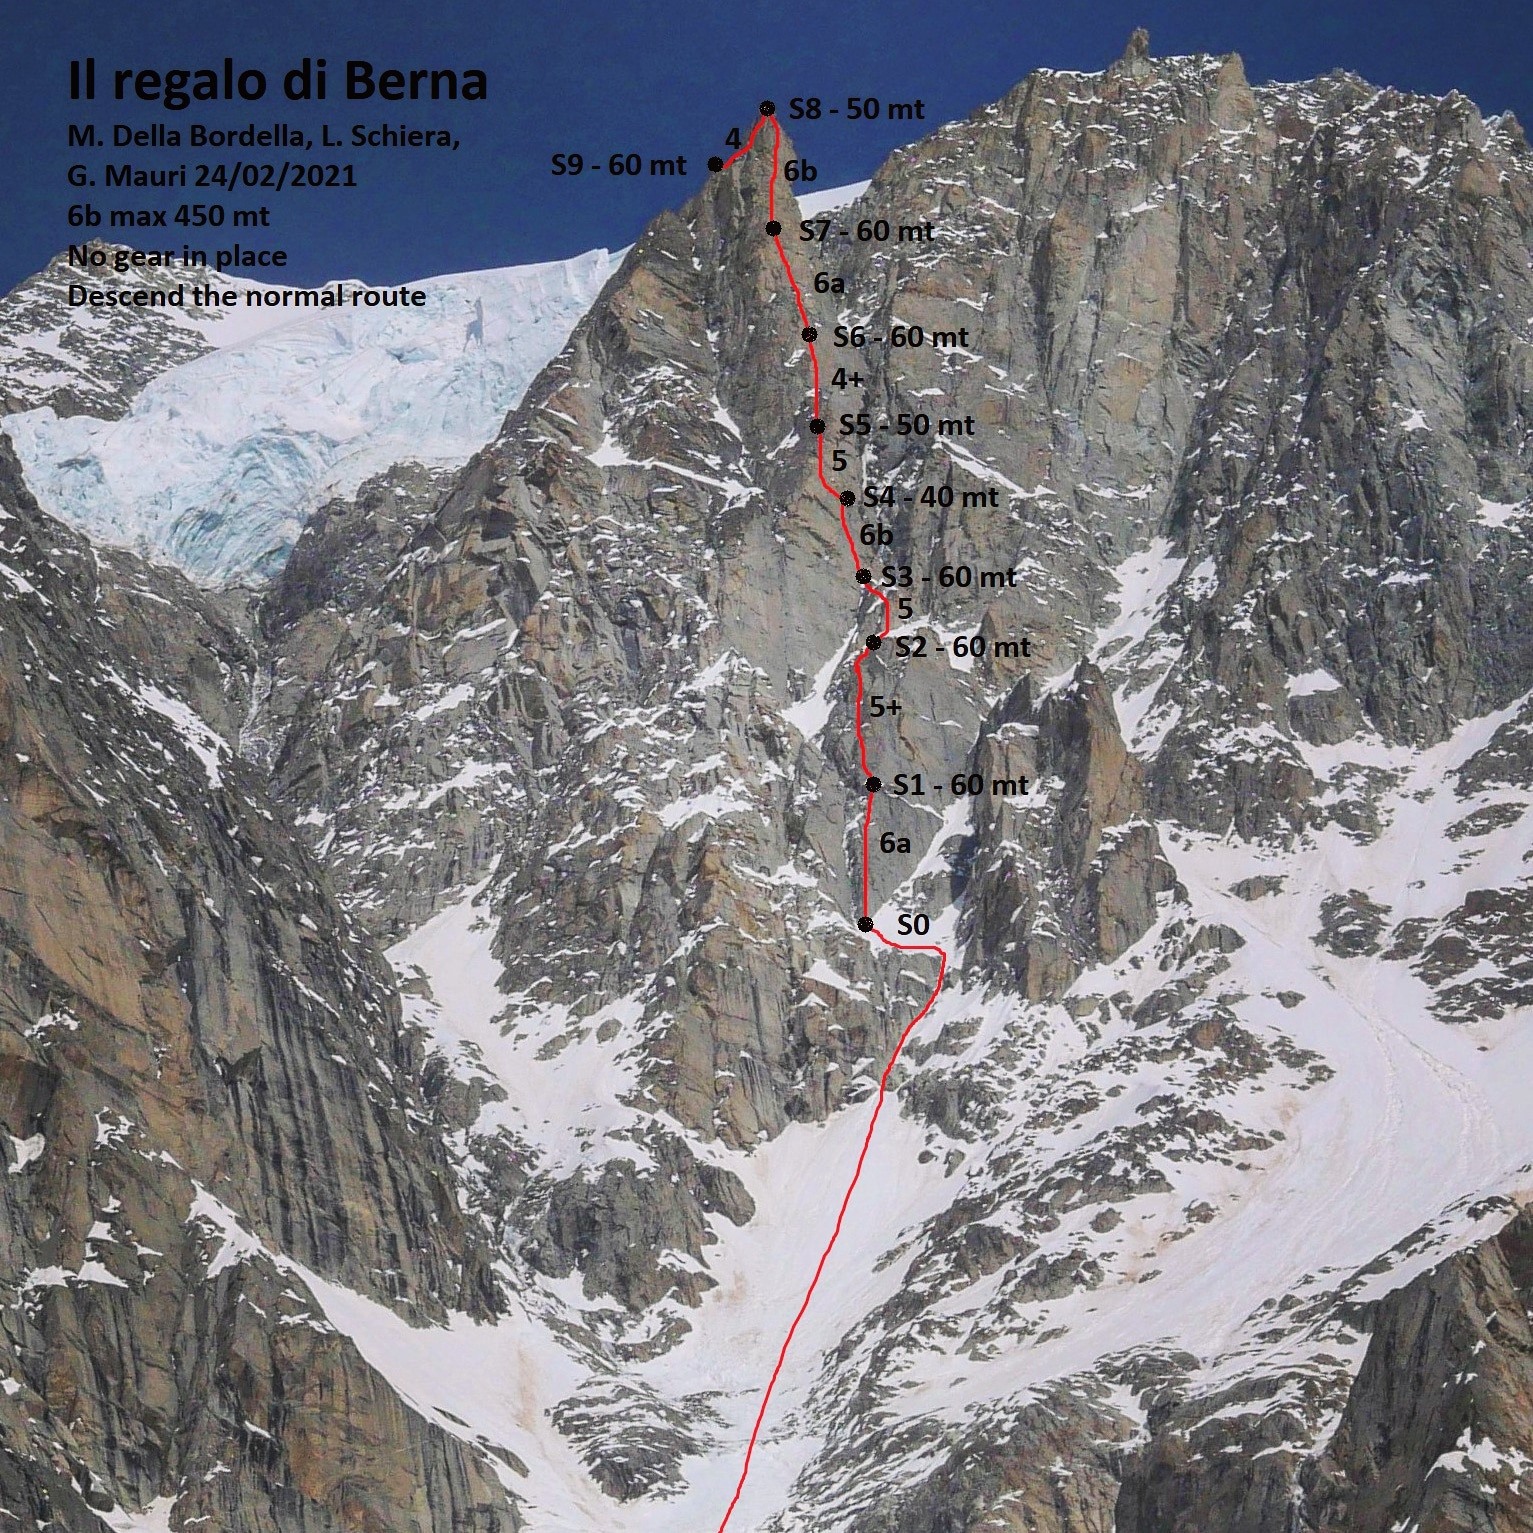 Маршрут "Il regalo di Berna" на вершину гранитного шпиля Piero Ghiglione по южной стене пика Гранд-Жорас (Grandes Jorasses, 4208 м) на Монблане.